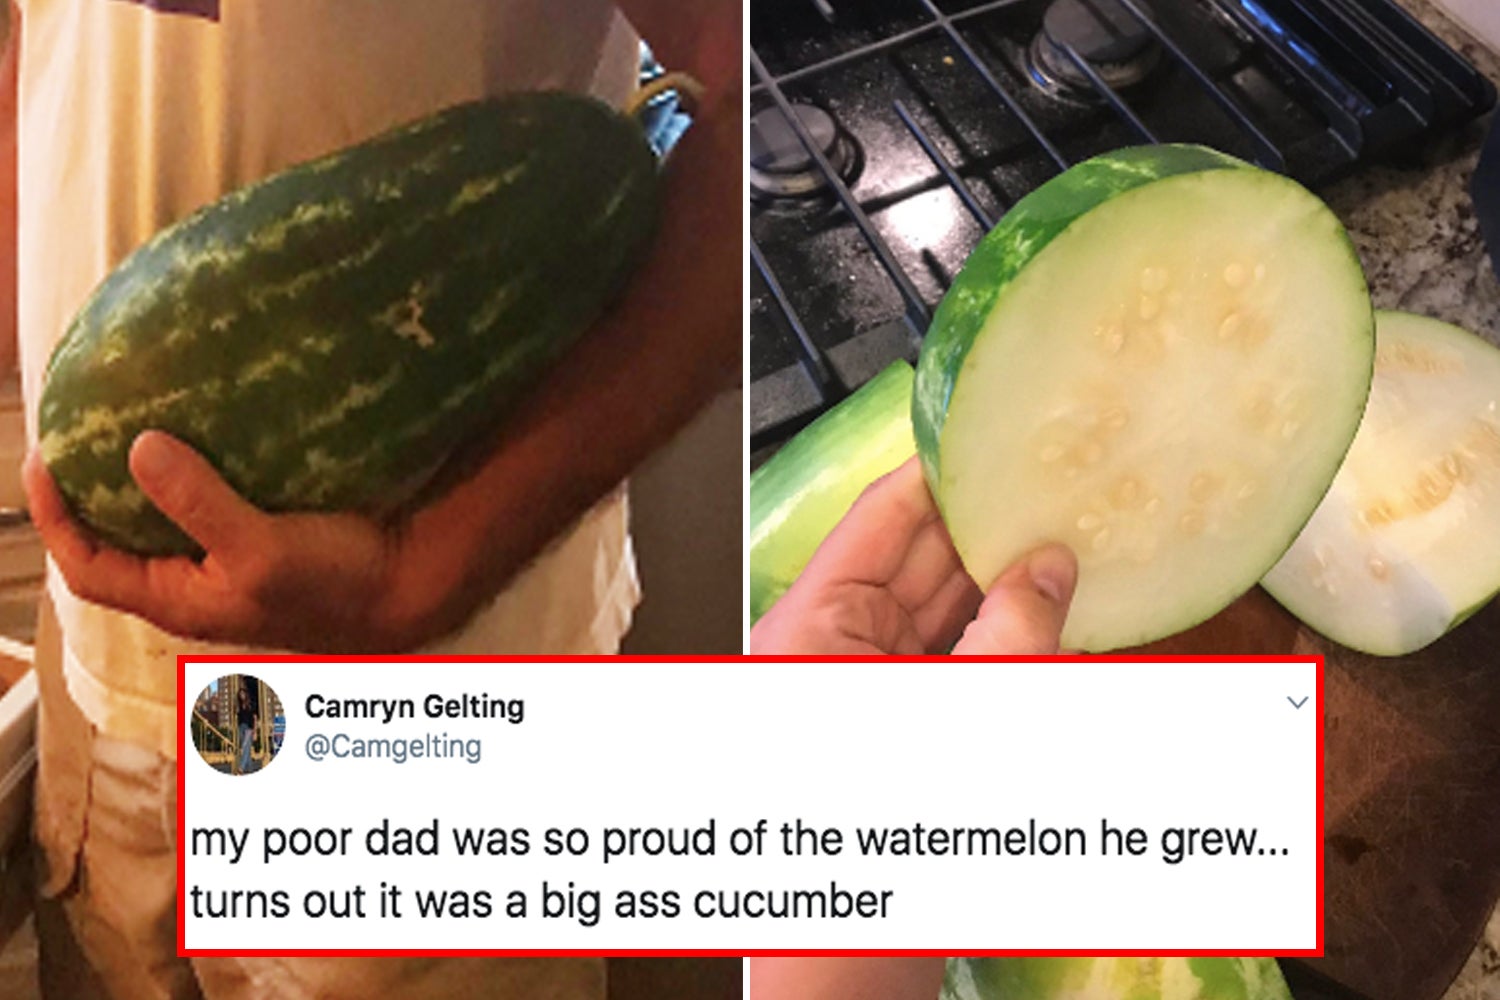 Giant Cucumber In Ass